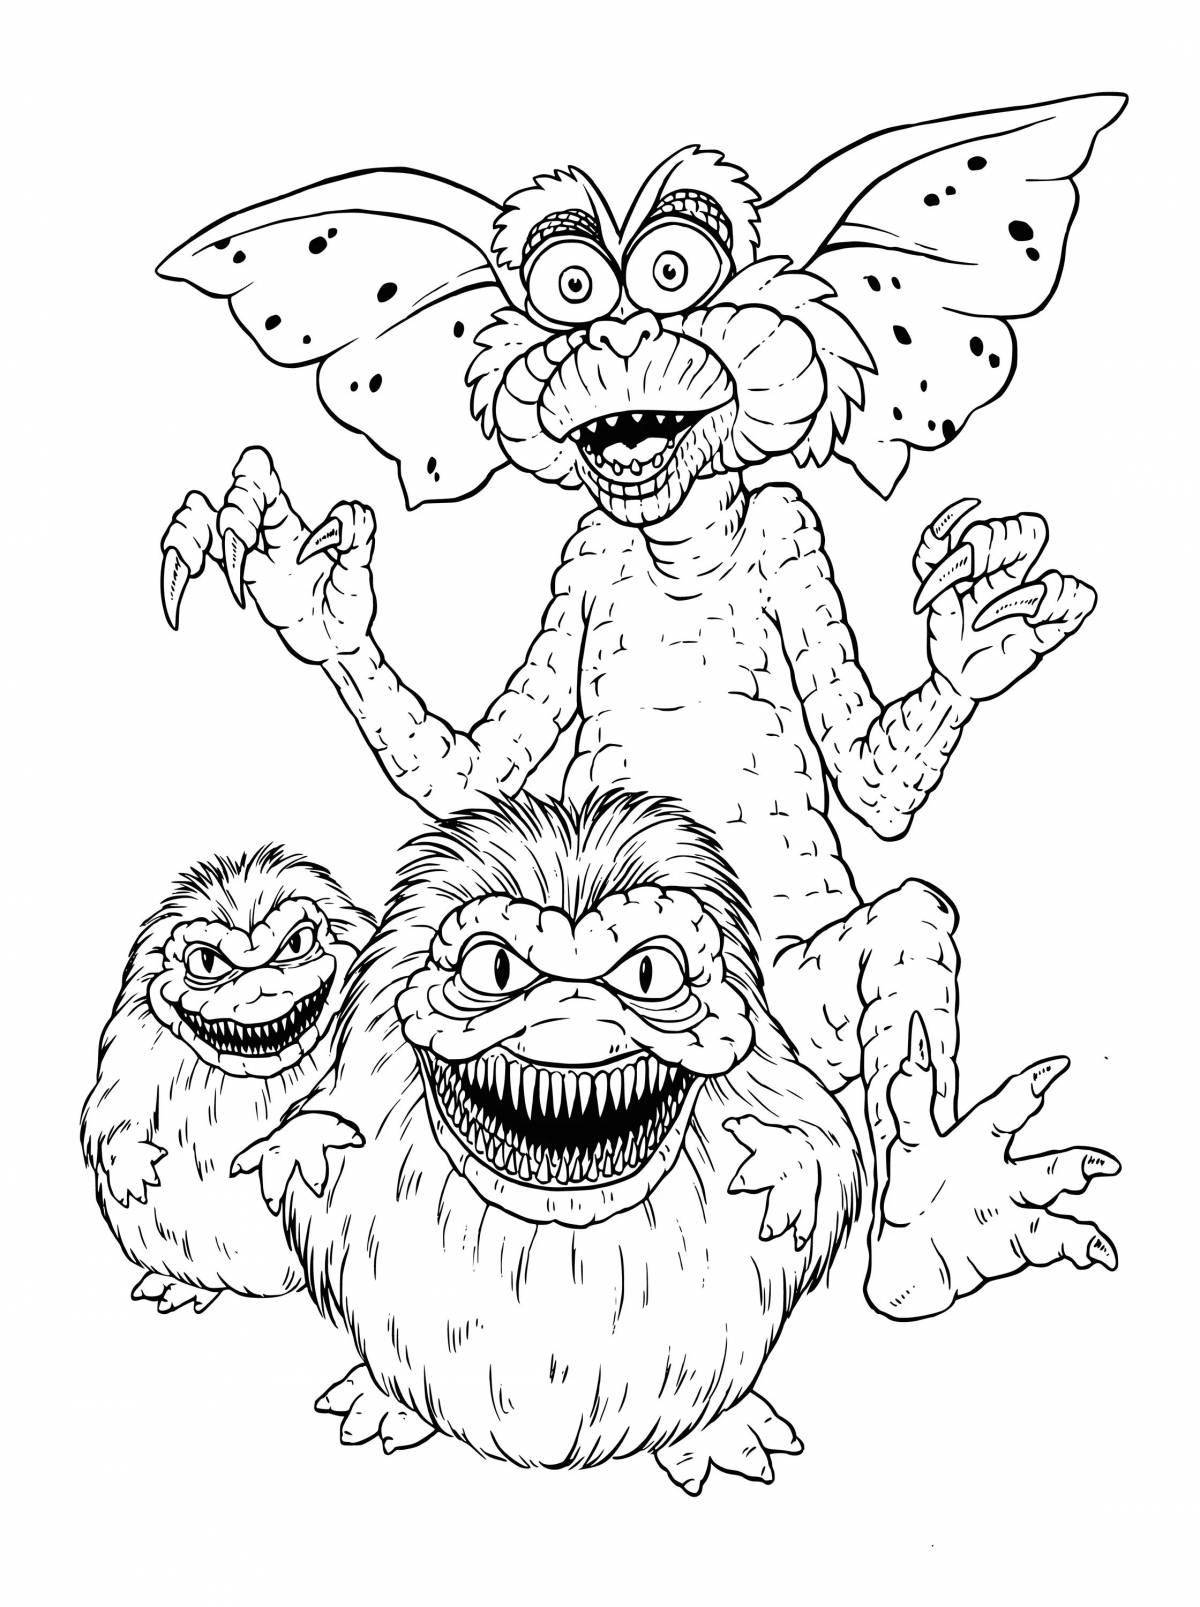 Maxi monsters fantastic coloring book